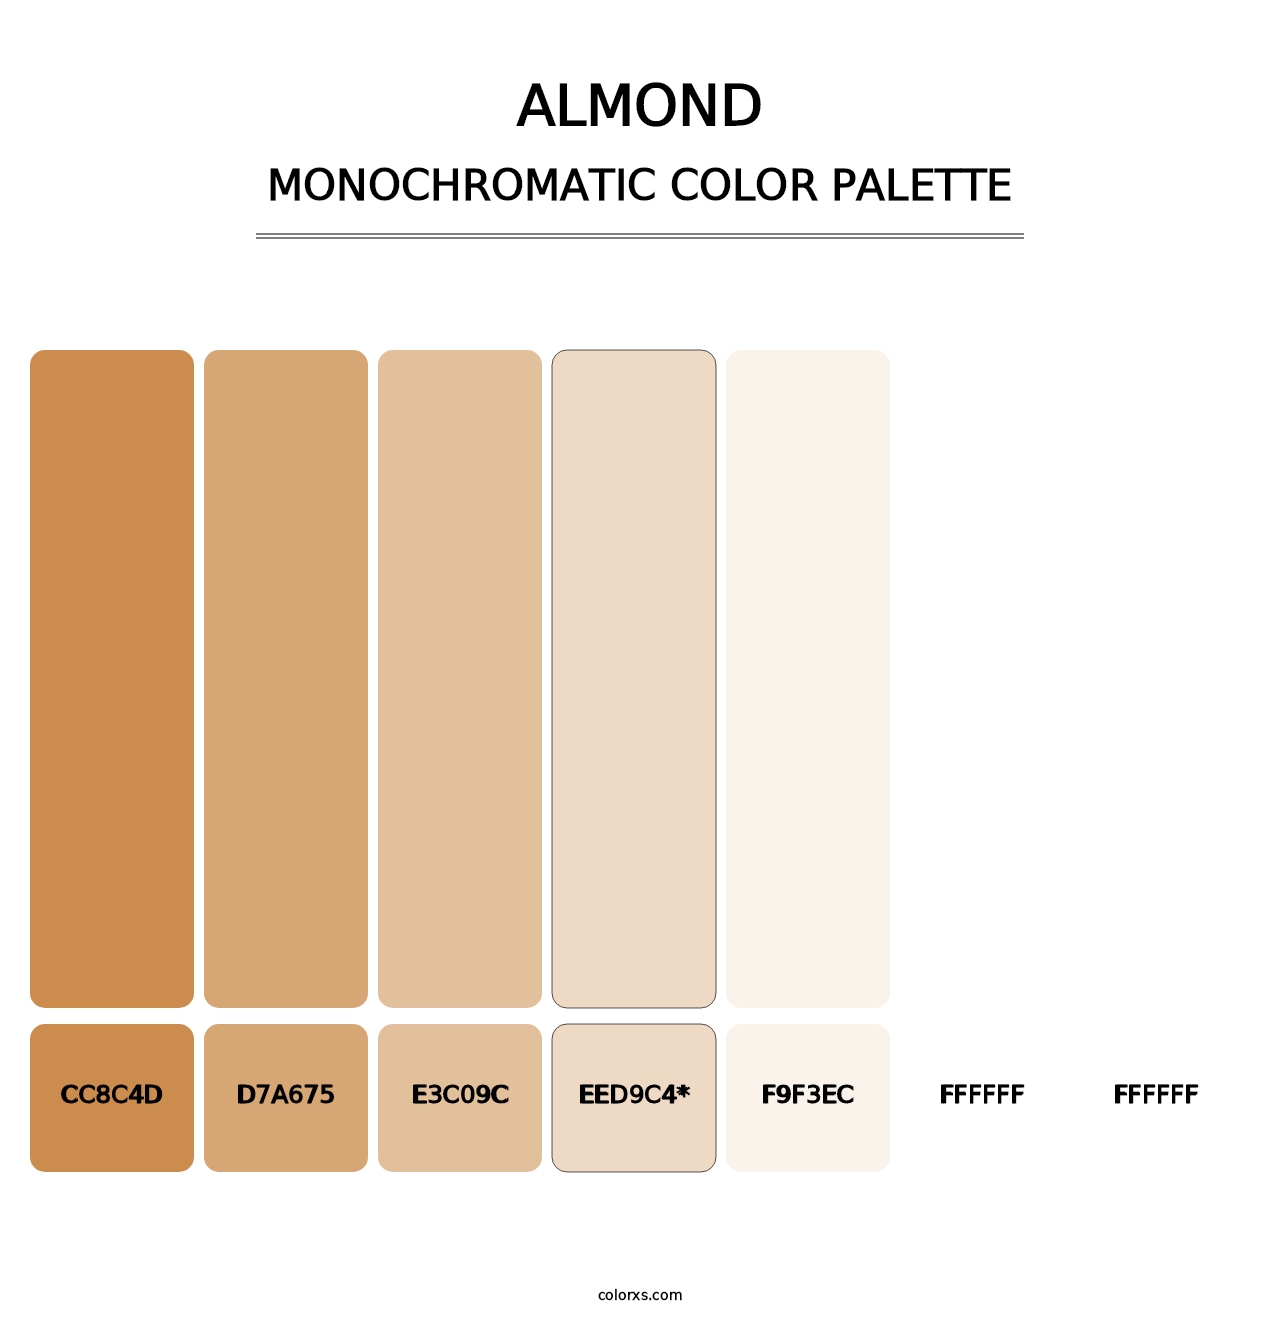 Almond - Monochromatic Color Palette